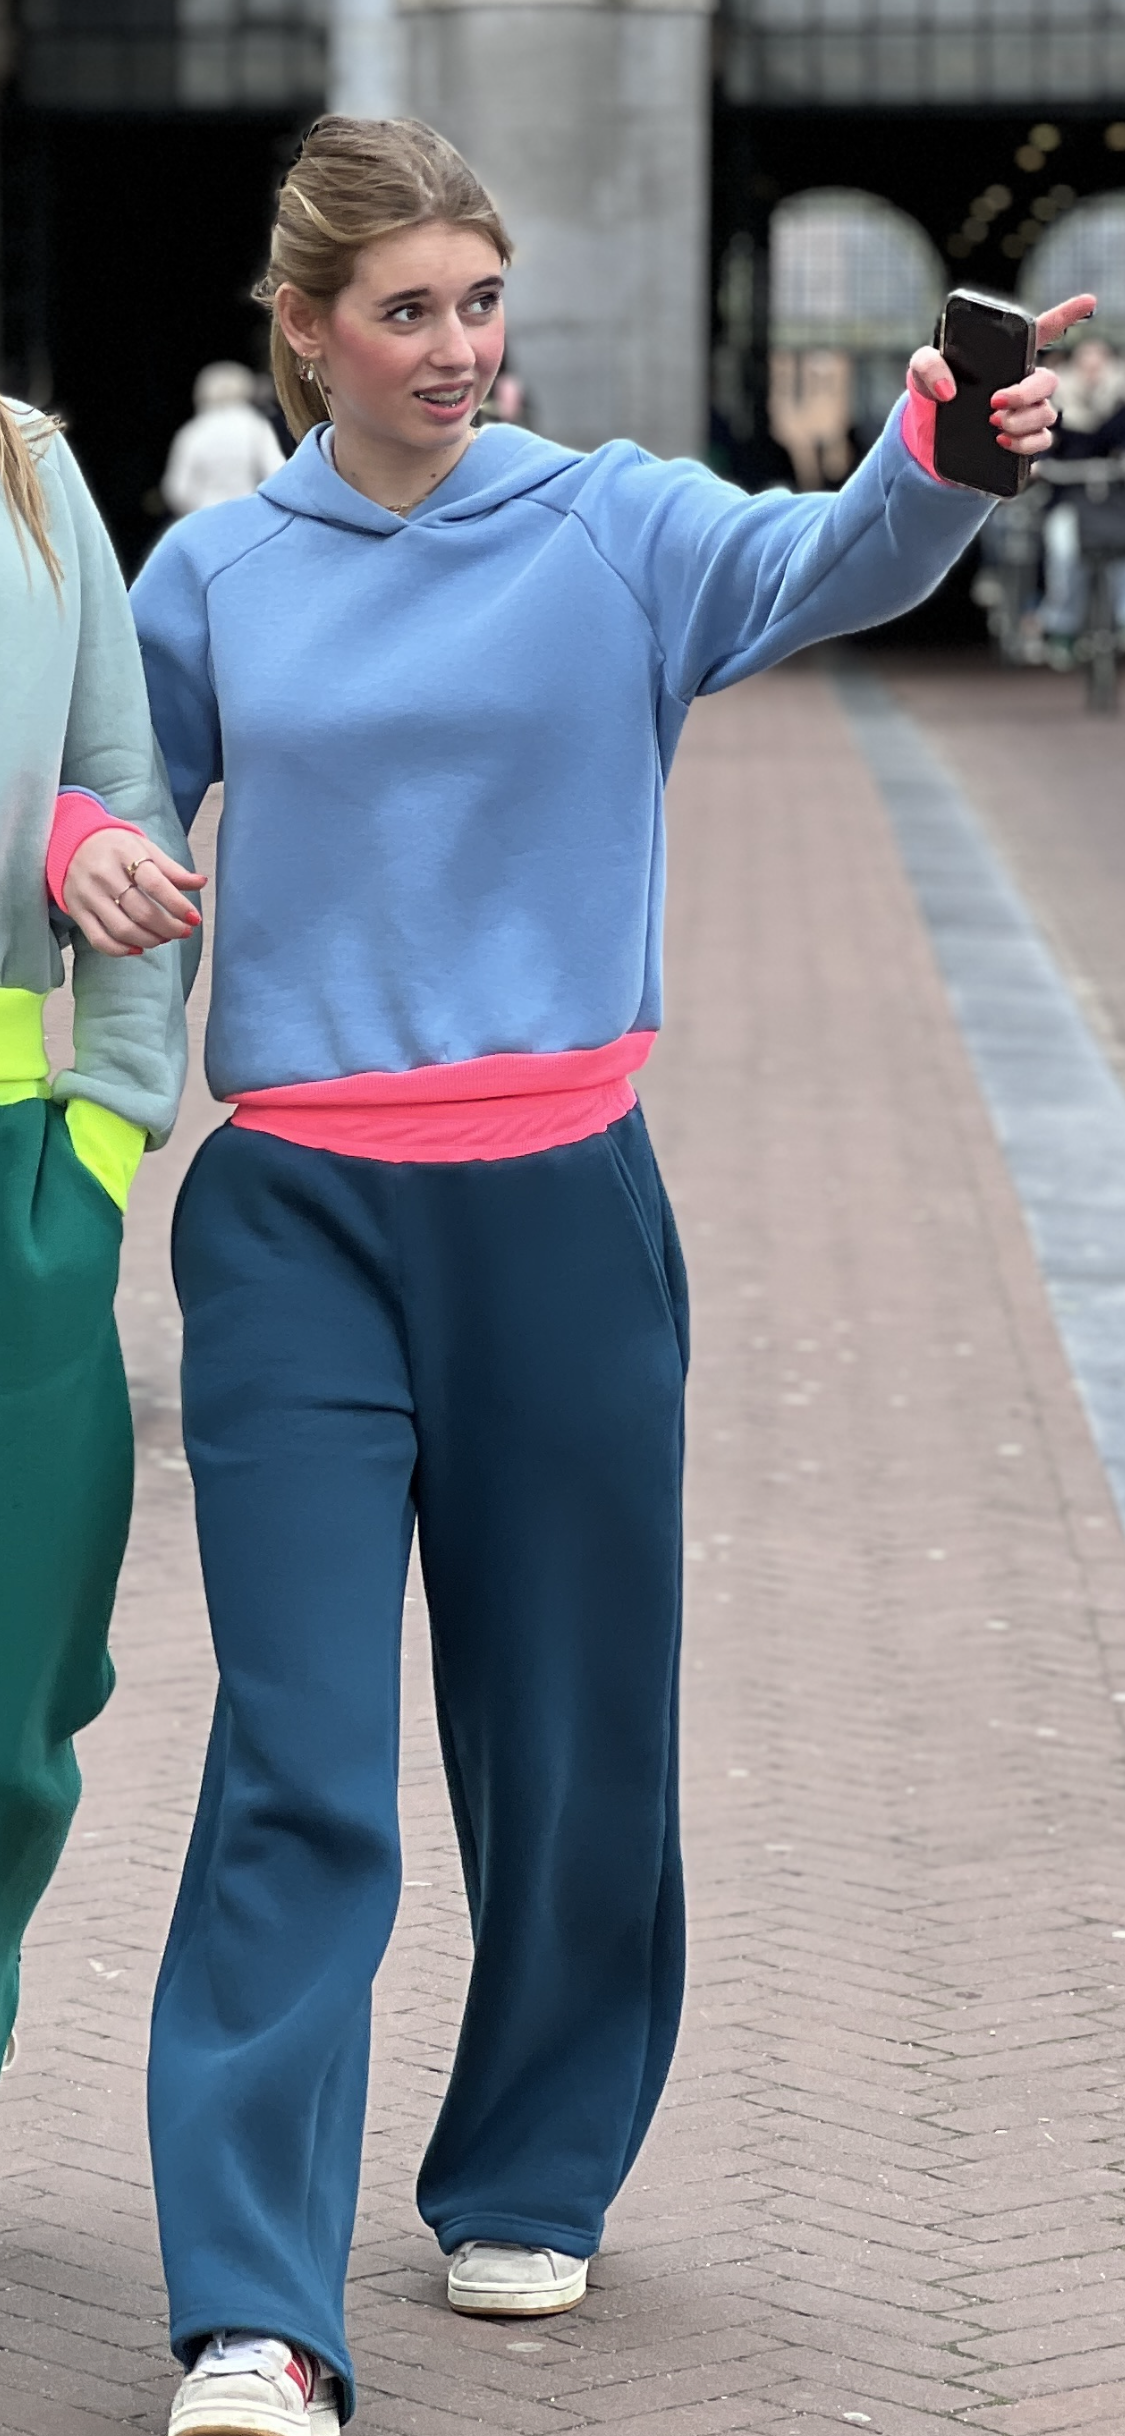 Jogging Marcel in Blue